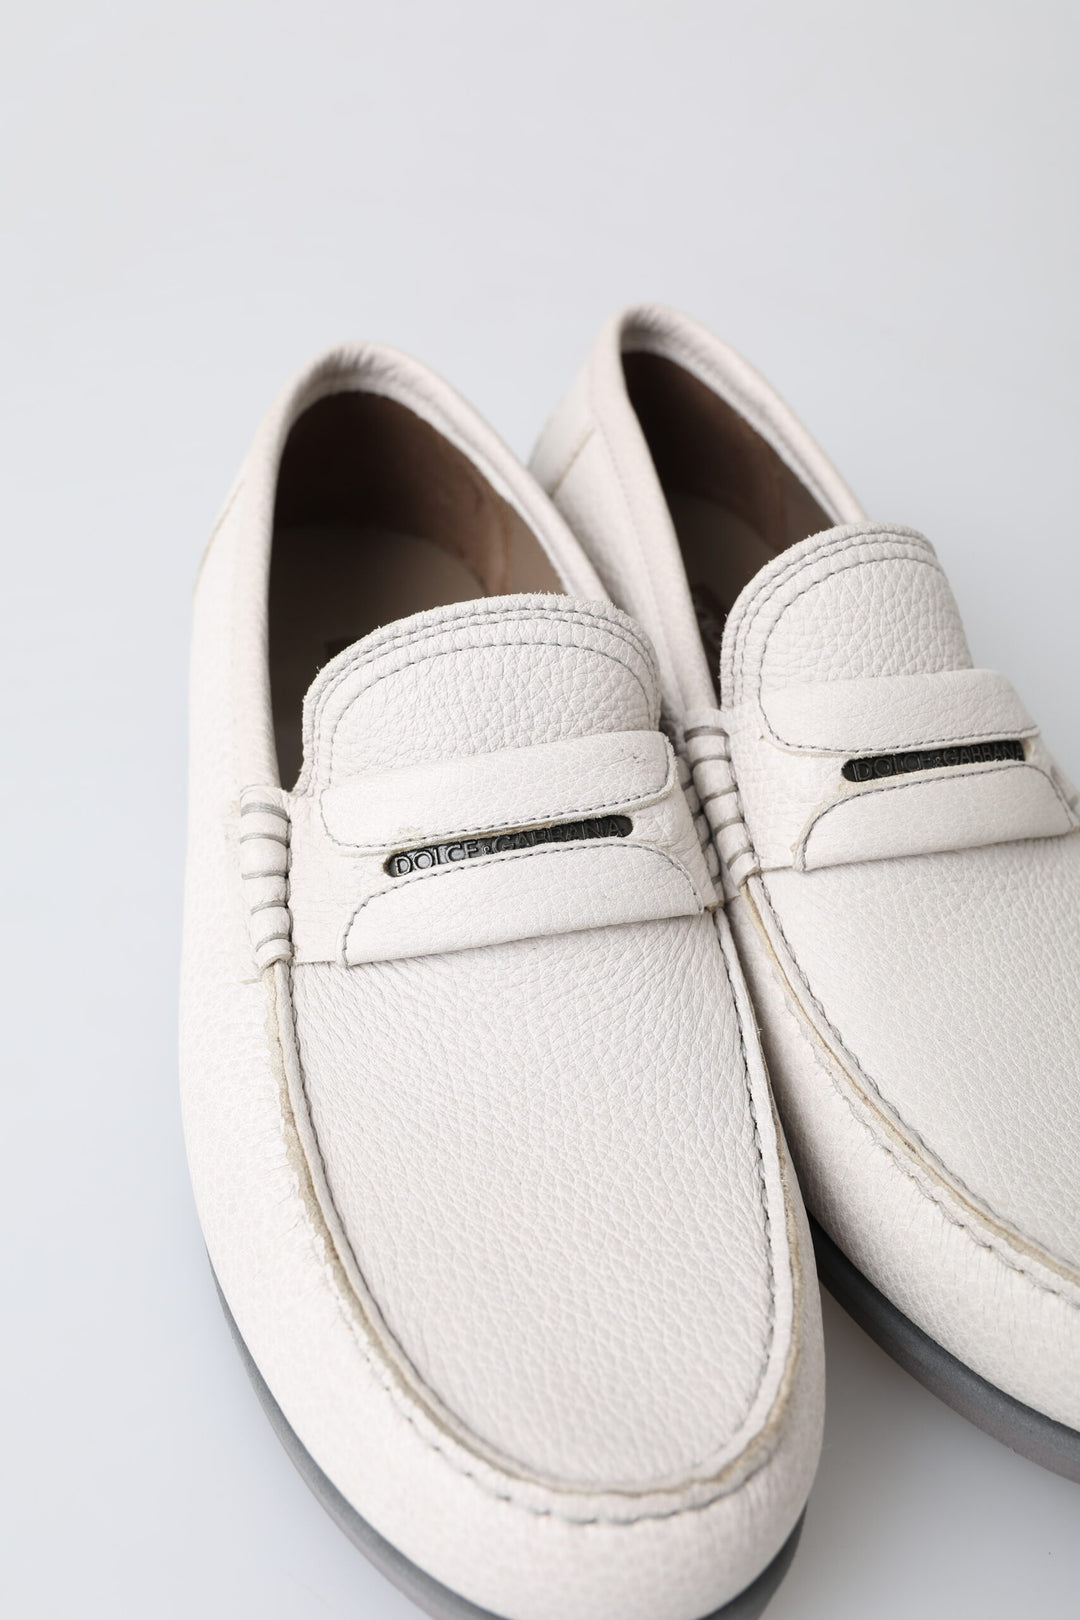 Dolce & Gabbana Elegant Light Grey Leather Loafers